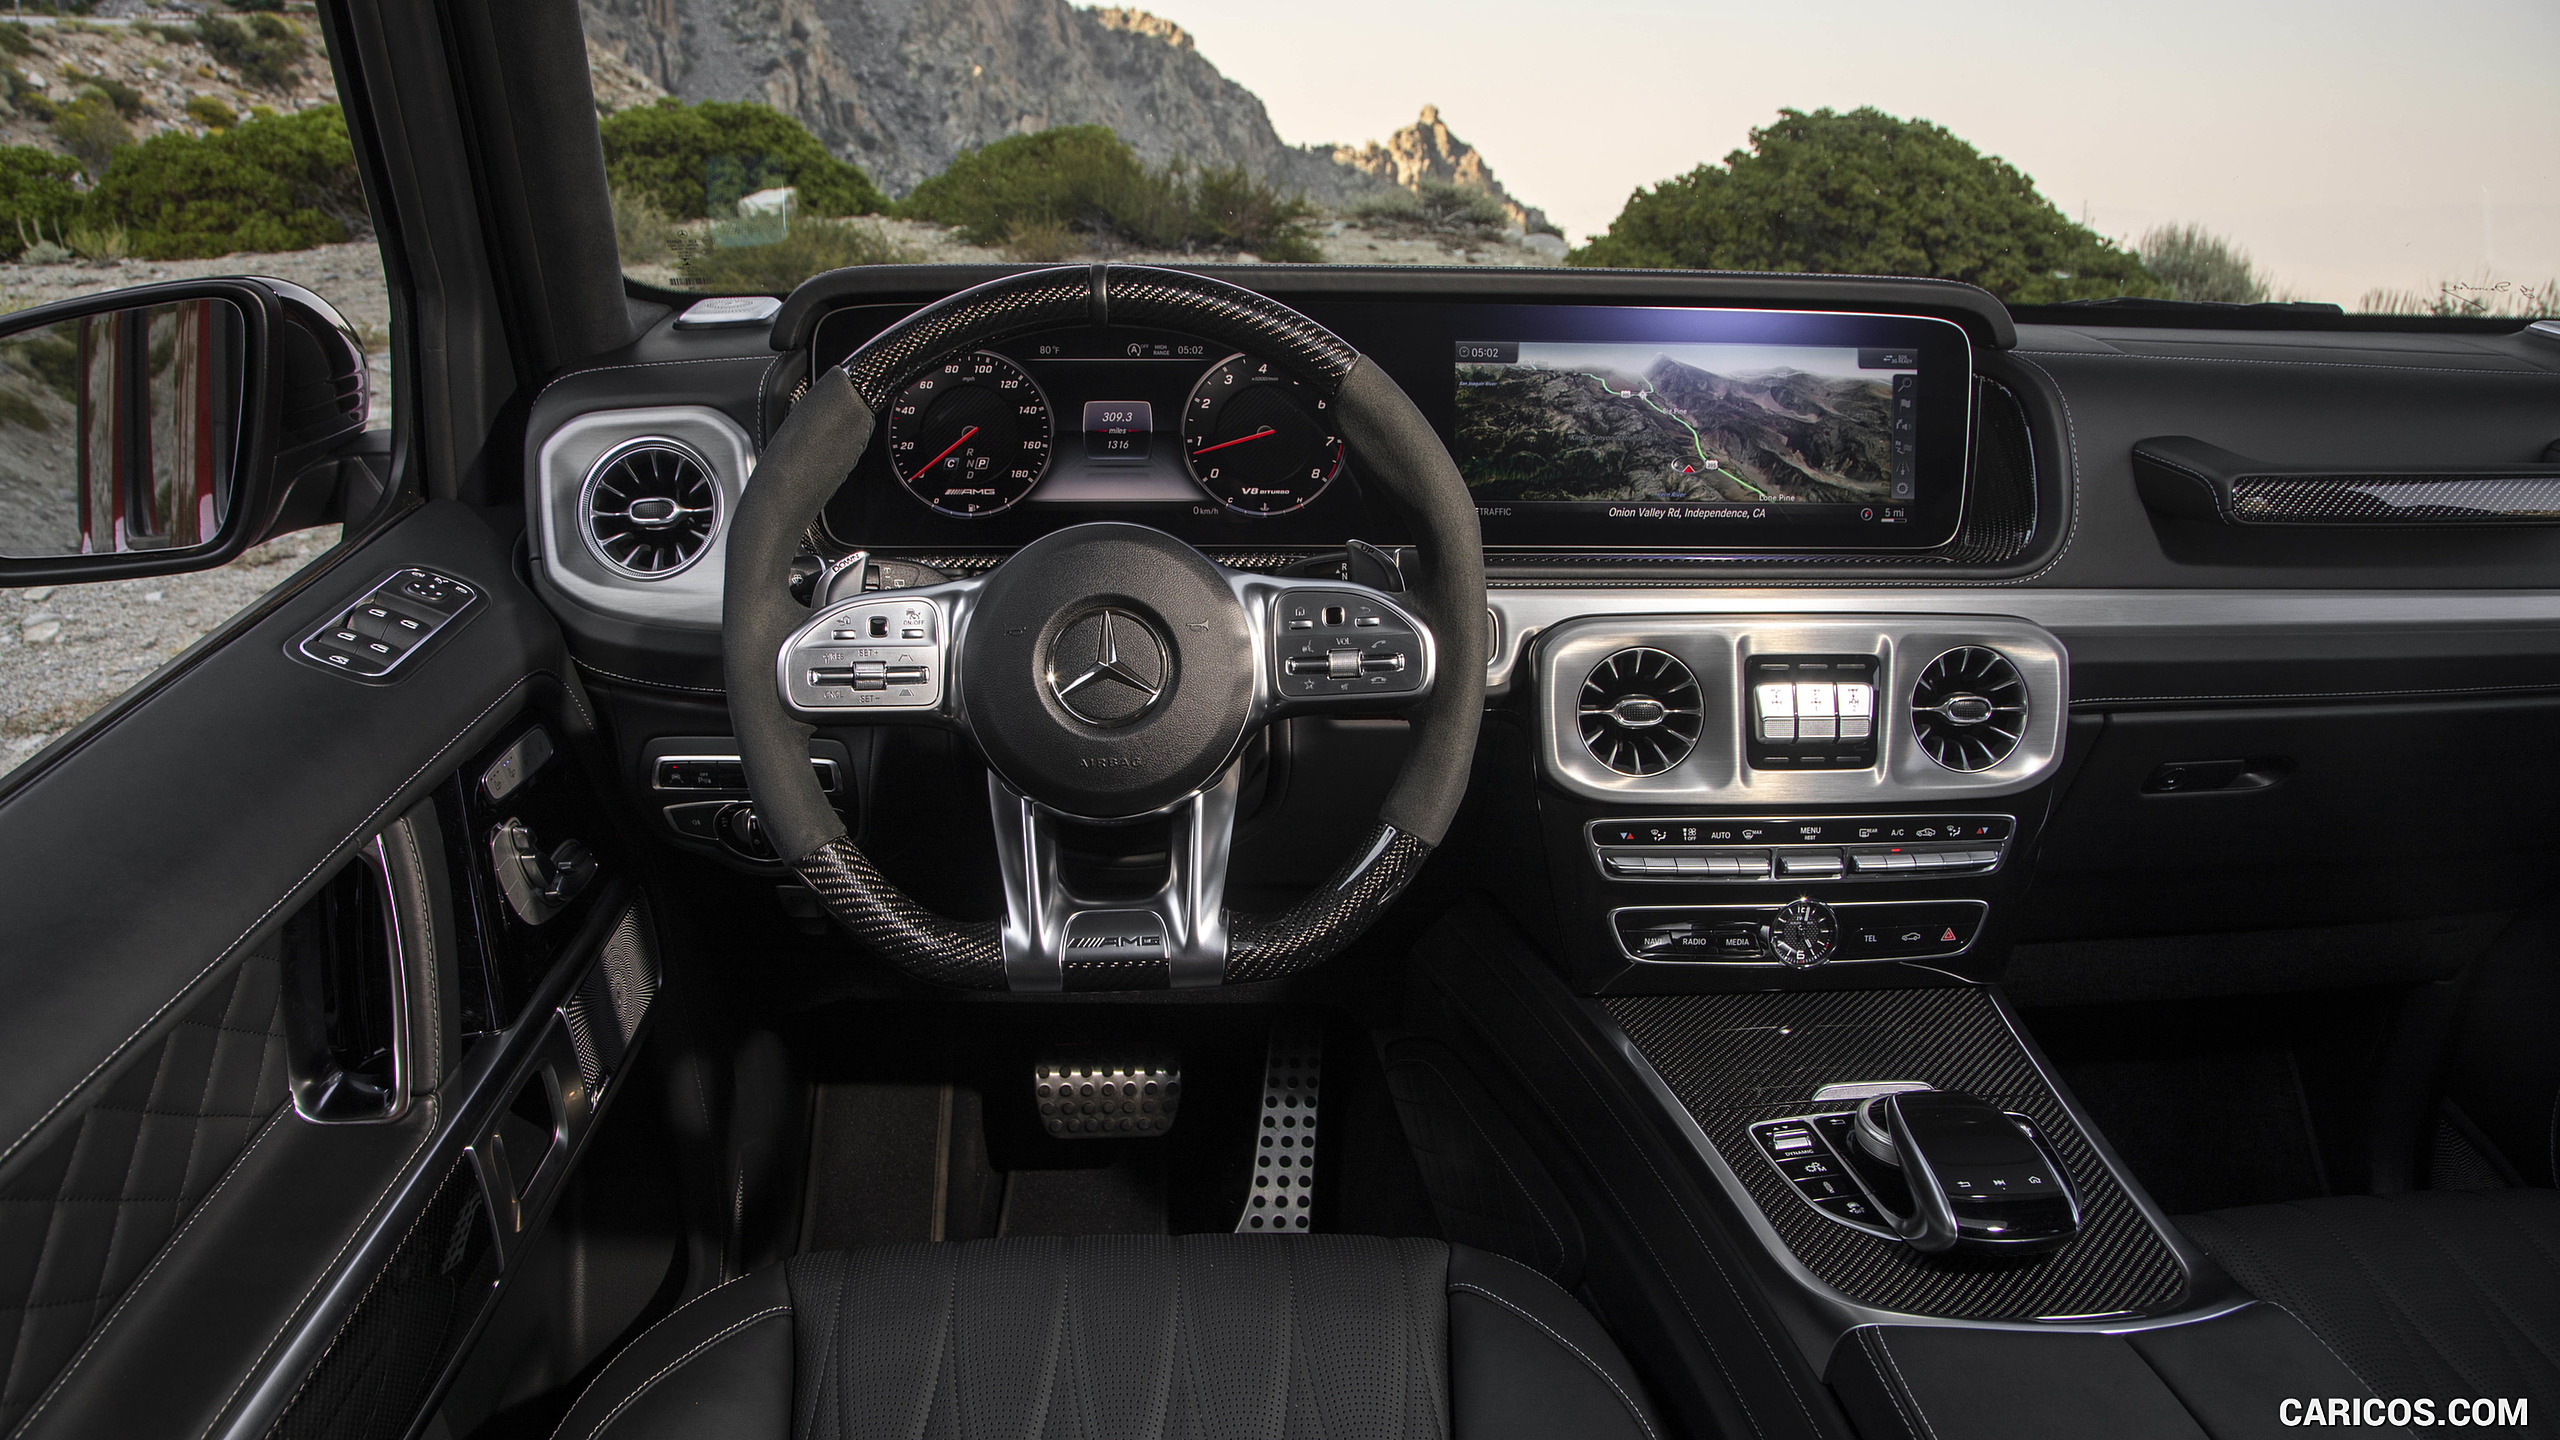 2019 Mercedes-AMG G63 (U.S.-Spec) - Interior, Cockpit, #426 of 452